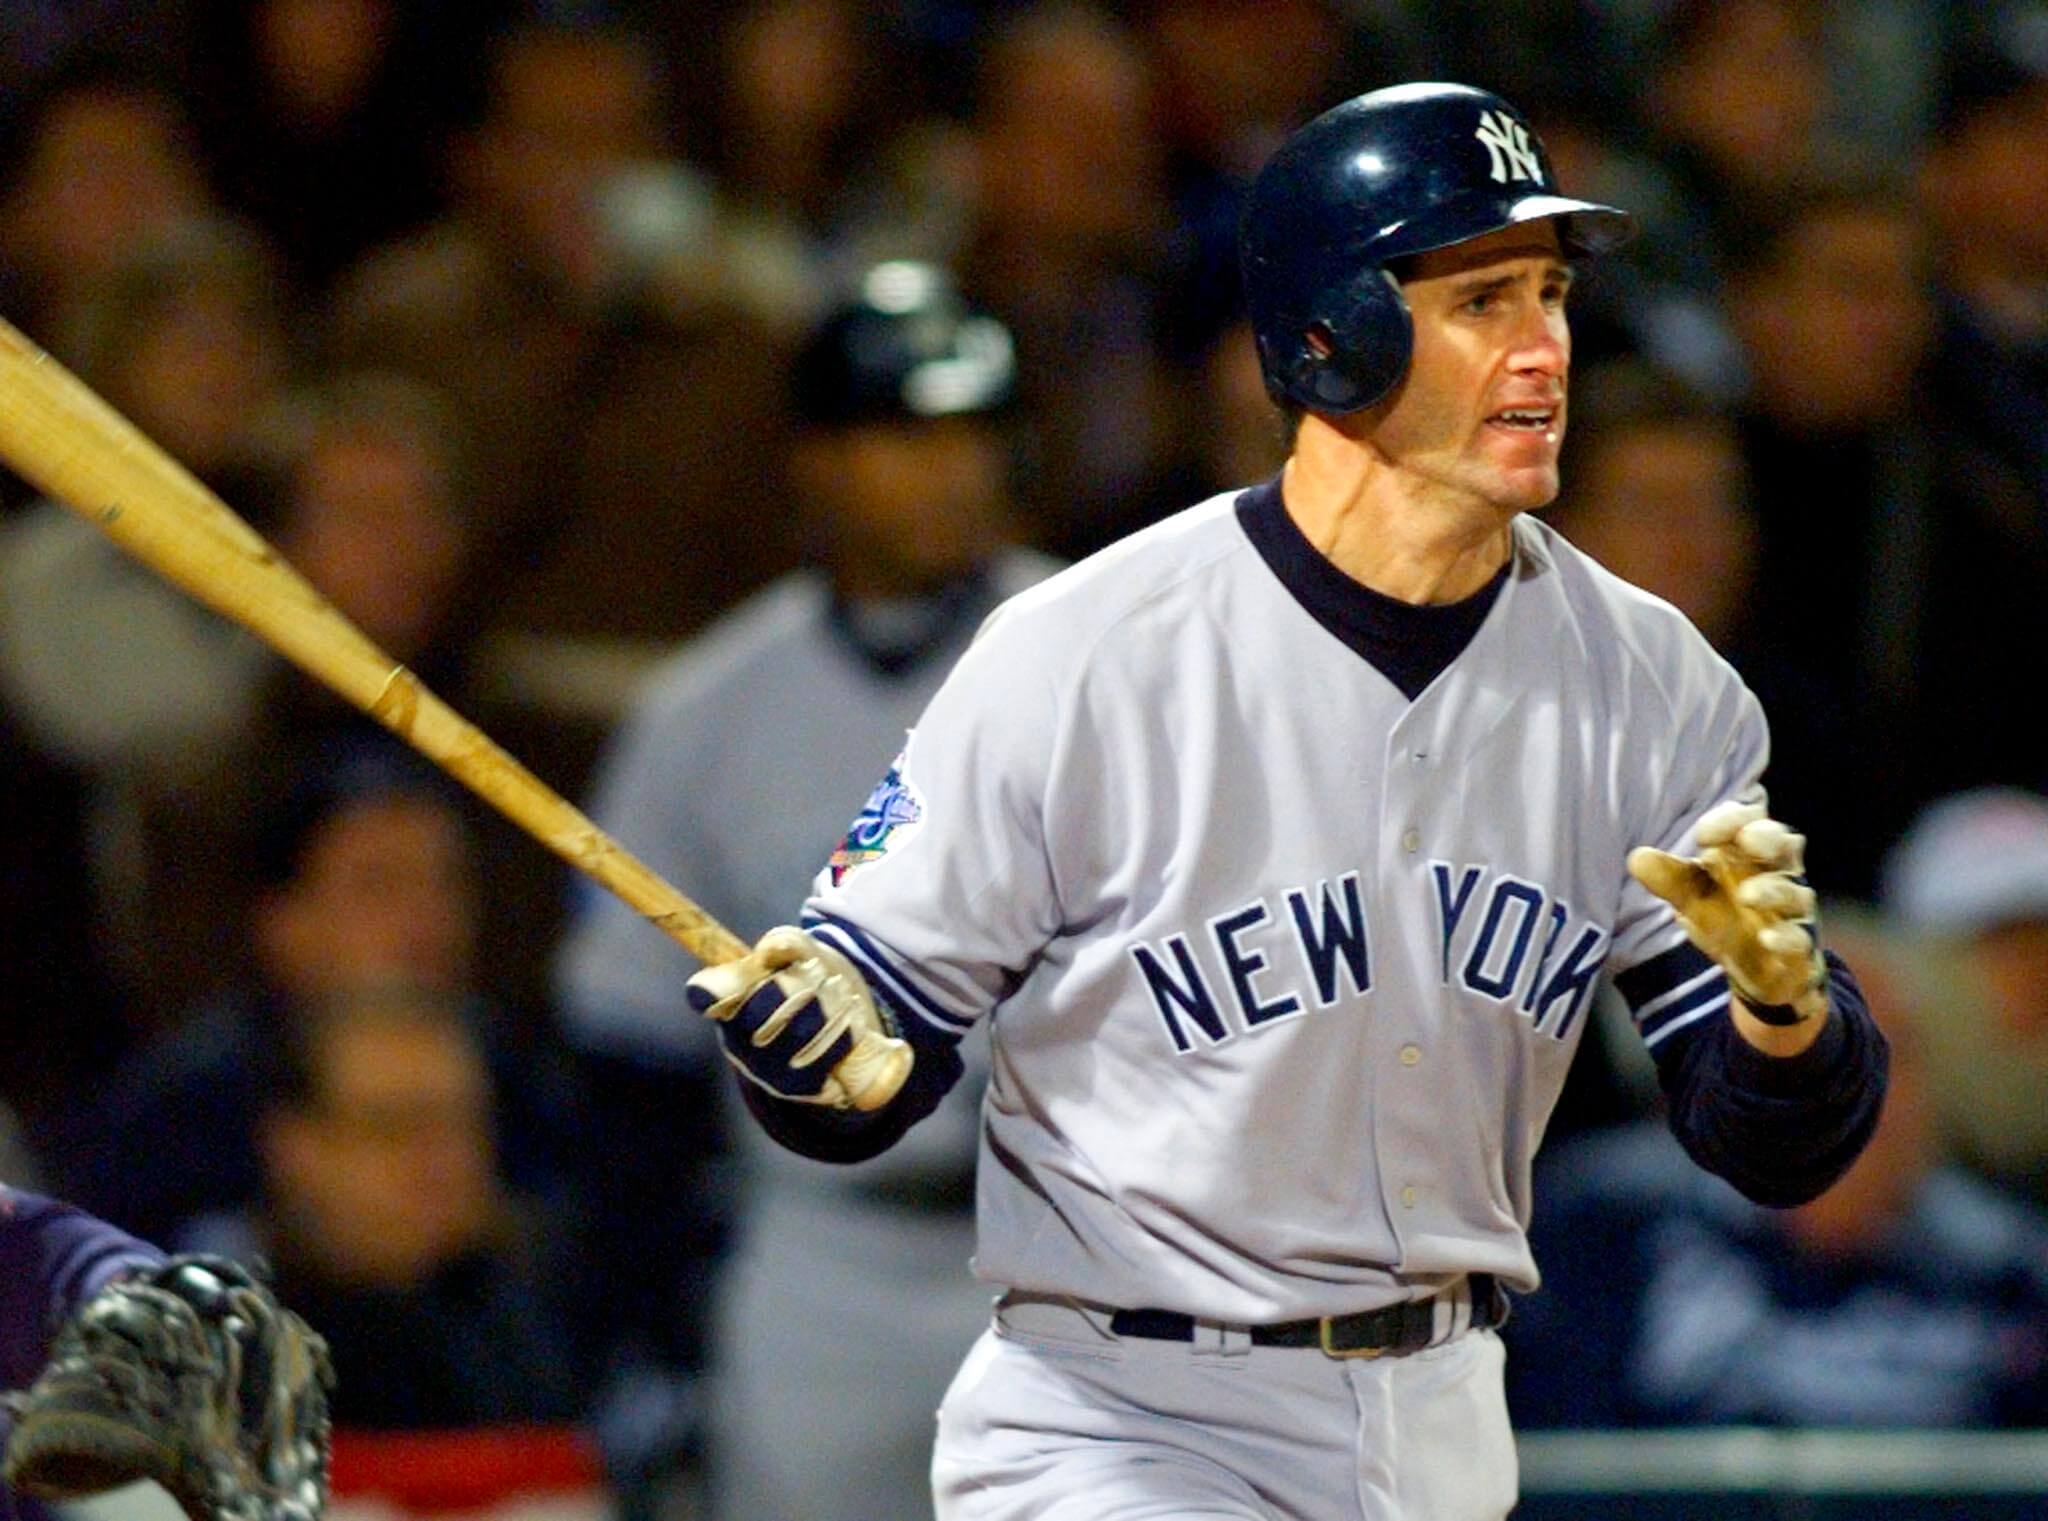 Yankees news: New York announces Paul O'Neill's jersey retirement